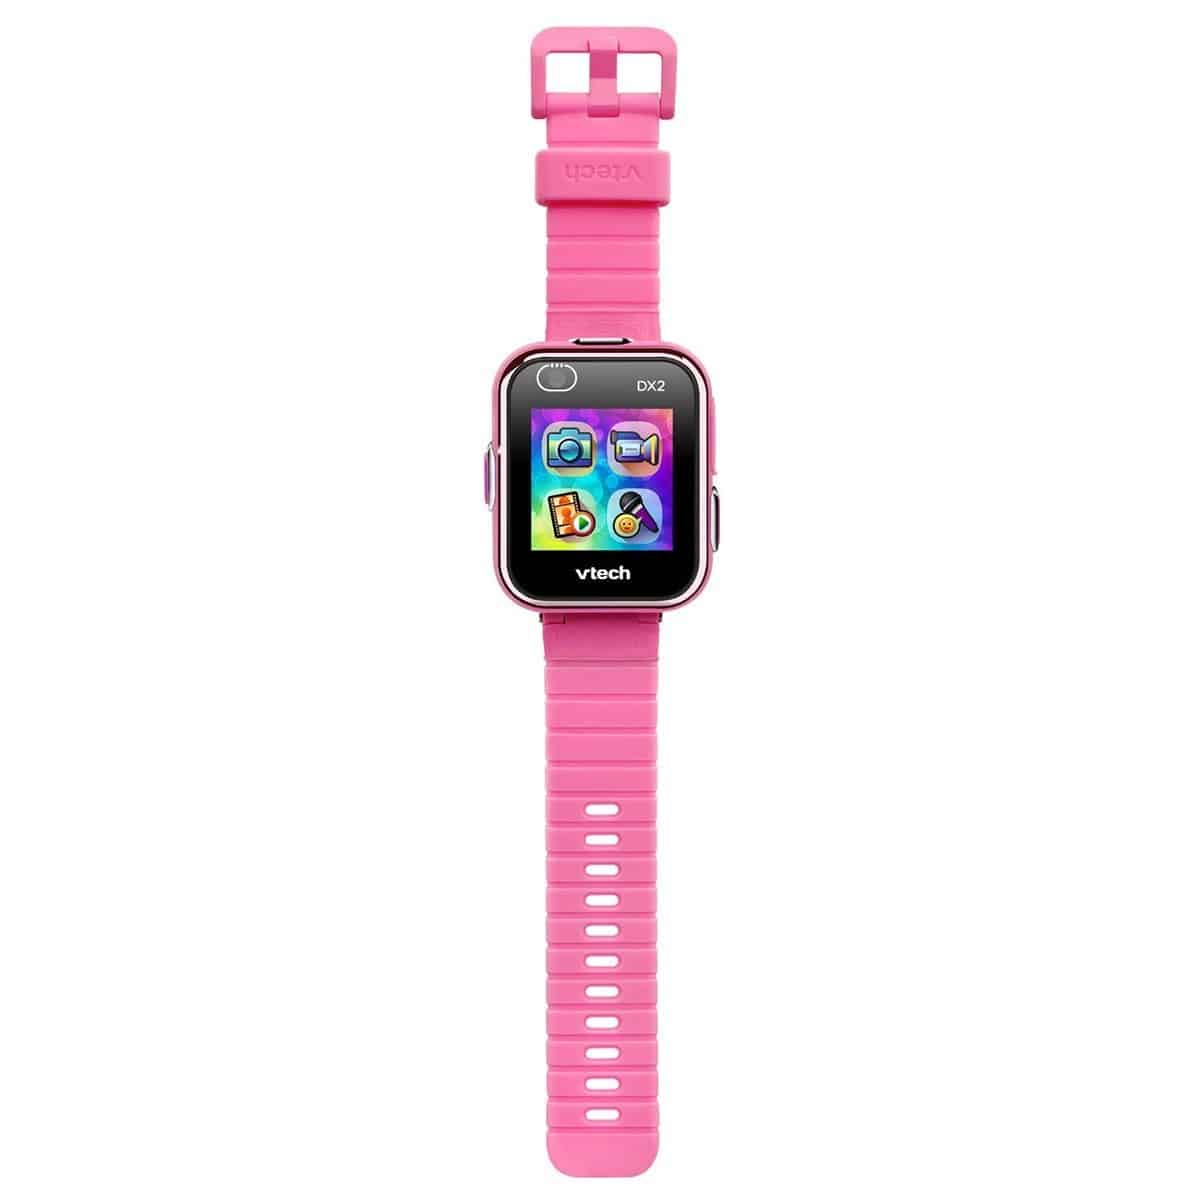 Vtech - Kidizoom Smart Watch DX 2 - Pink